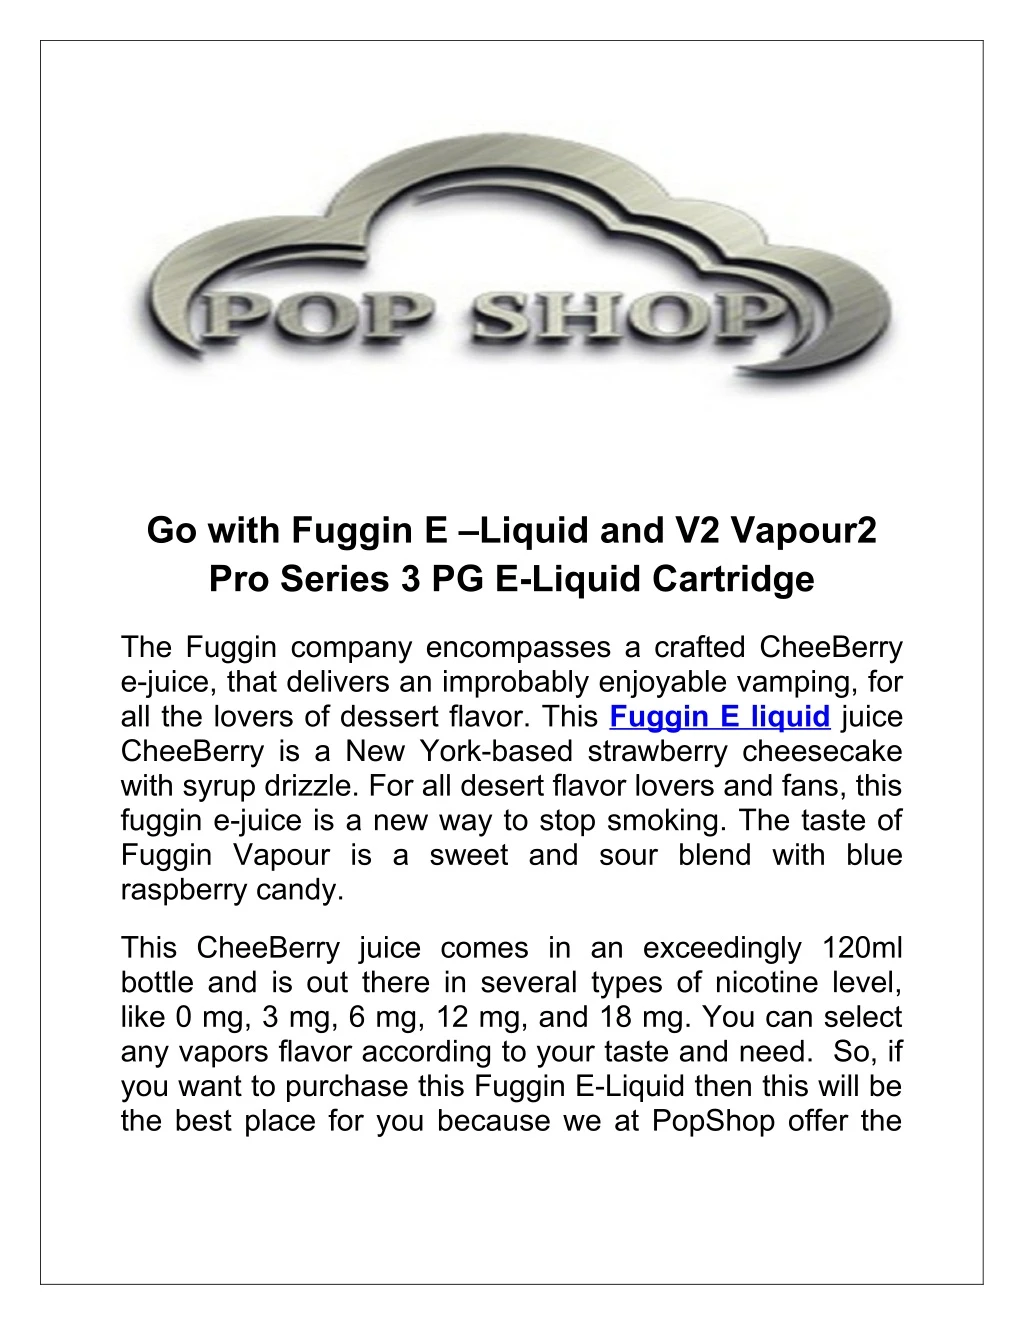 go with fuggin e liquid and v2 vapour2 pro series